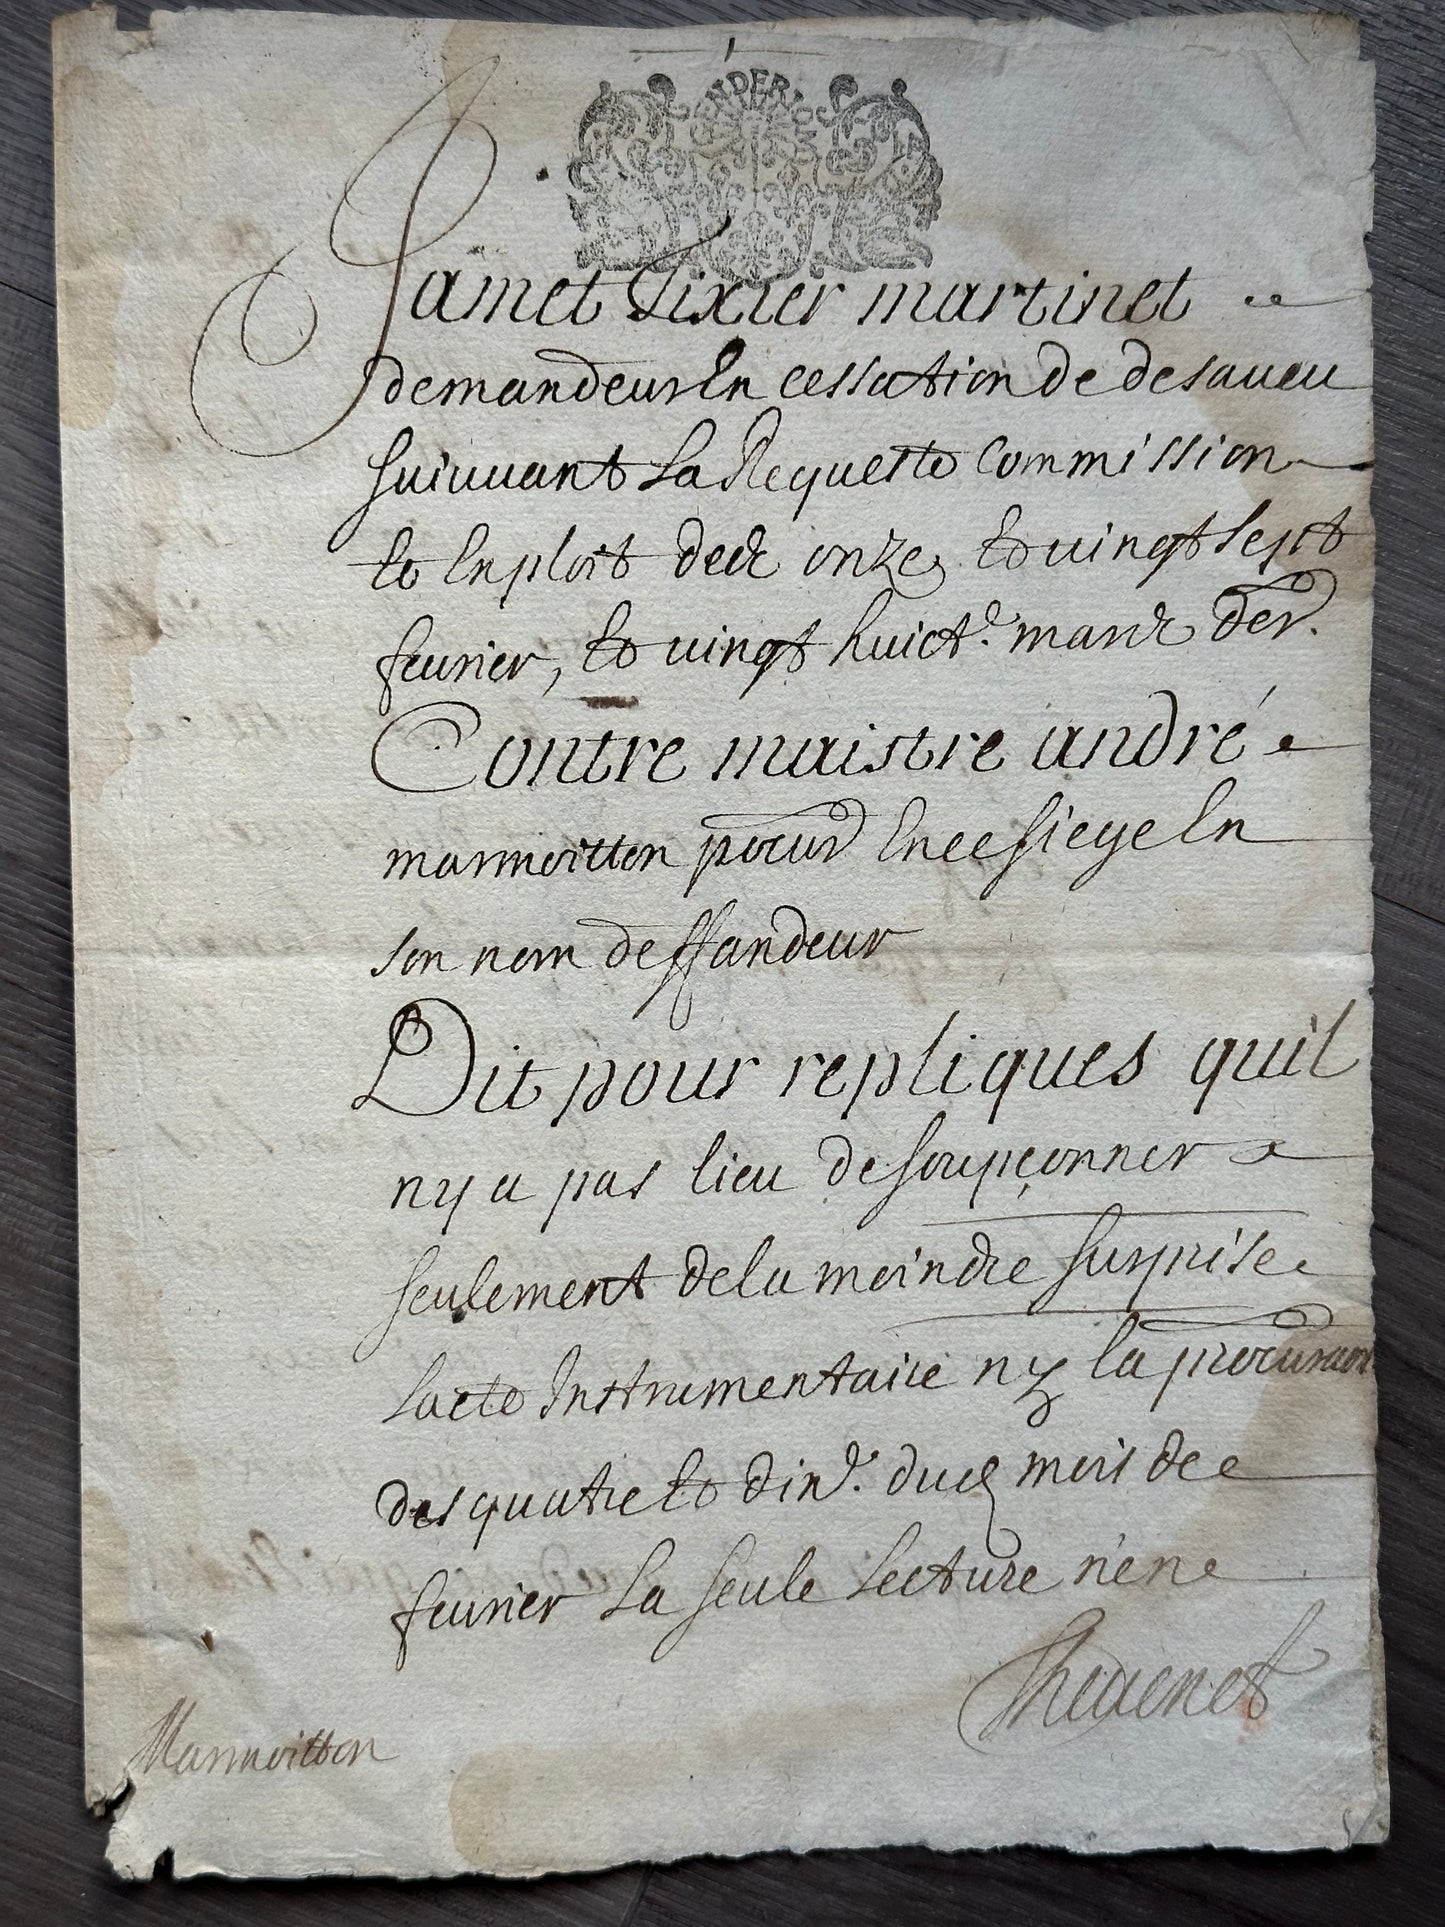 1710 French Manuscript